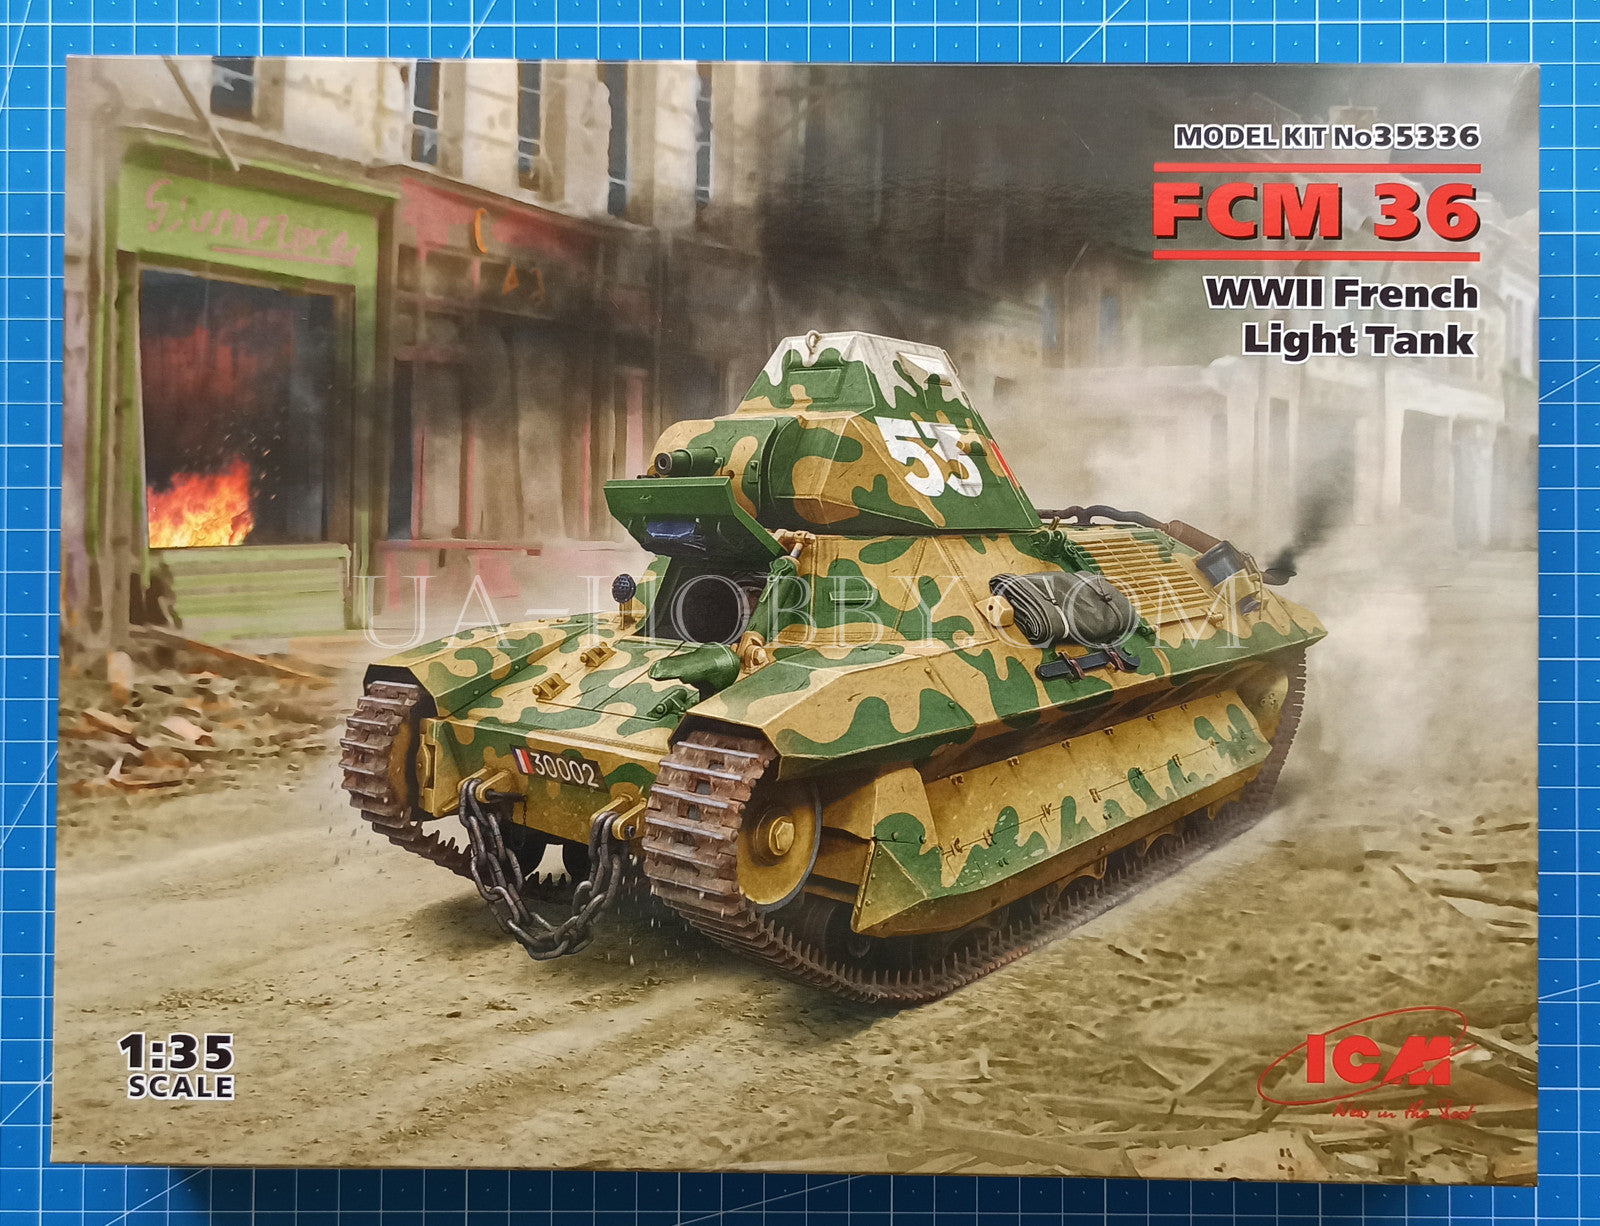 1/35 WWII French Light Tank FCM 36. ICM 35336